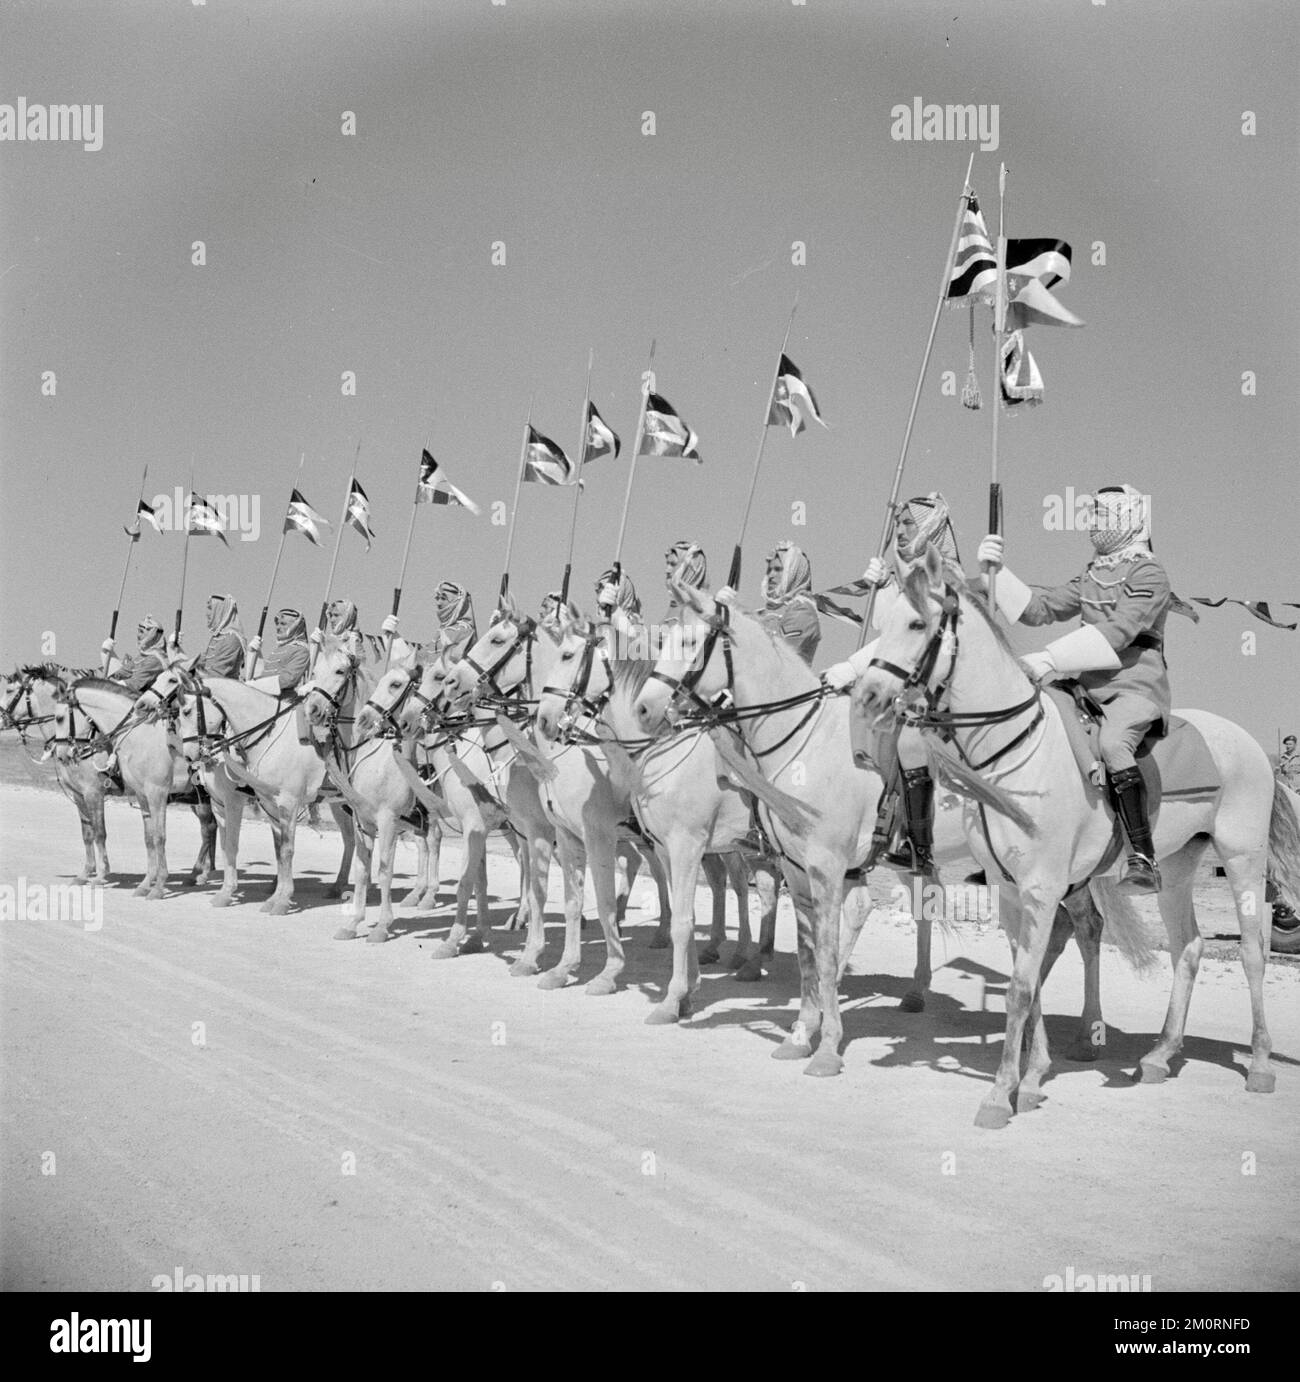 Willem van de Poll - Cavalry of the Royal Guard of Honor on horseback at a parade at Amman, Jordan - 1950 Stock Photo